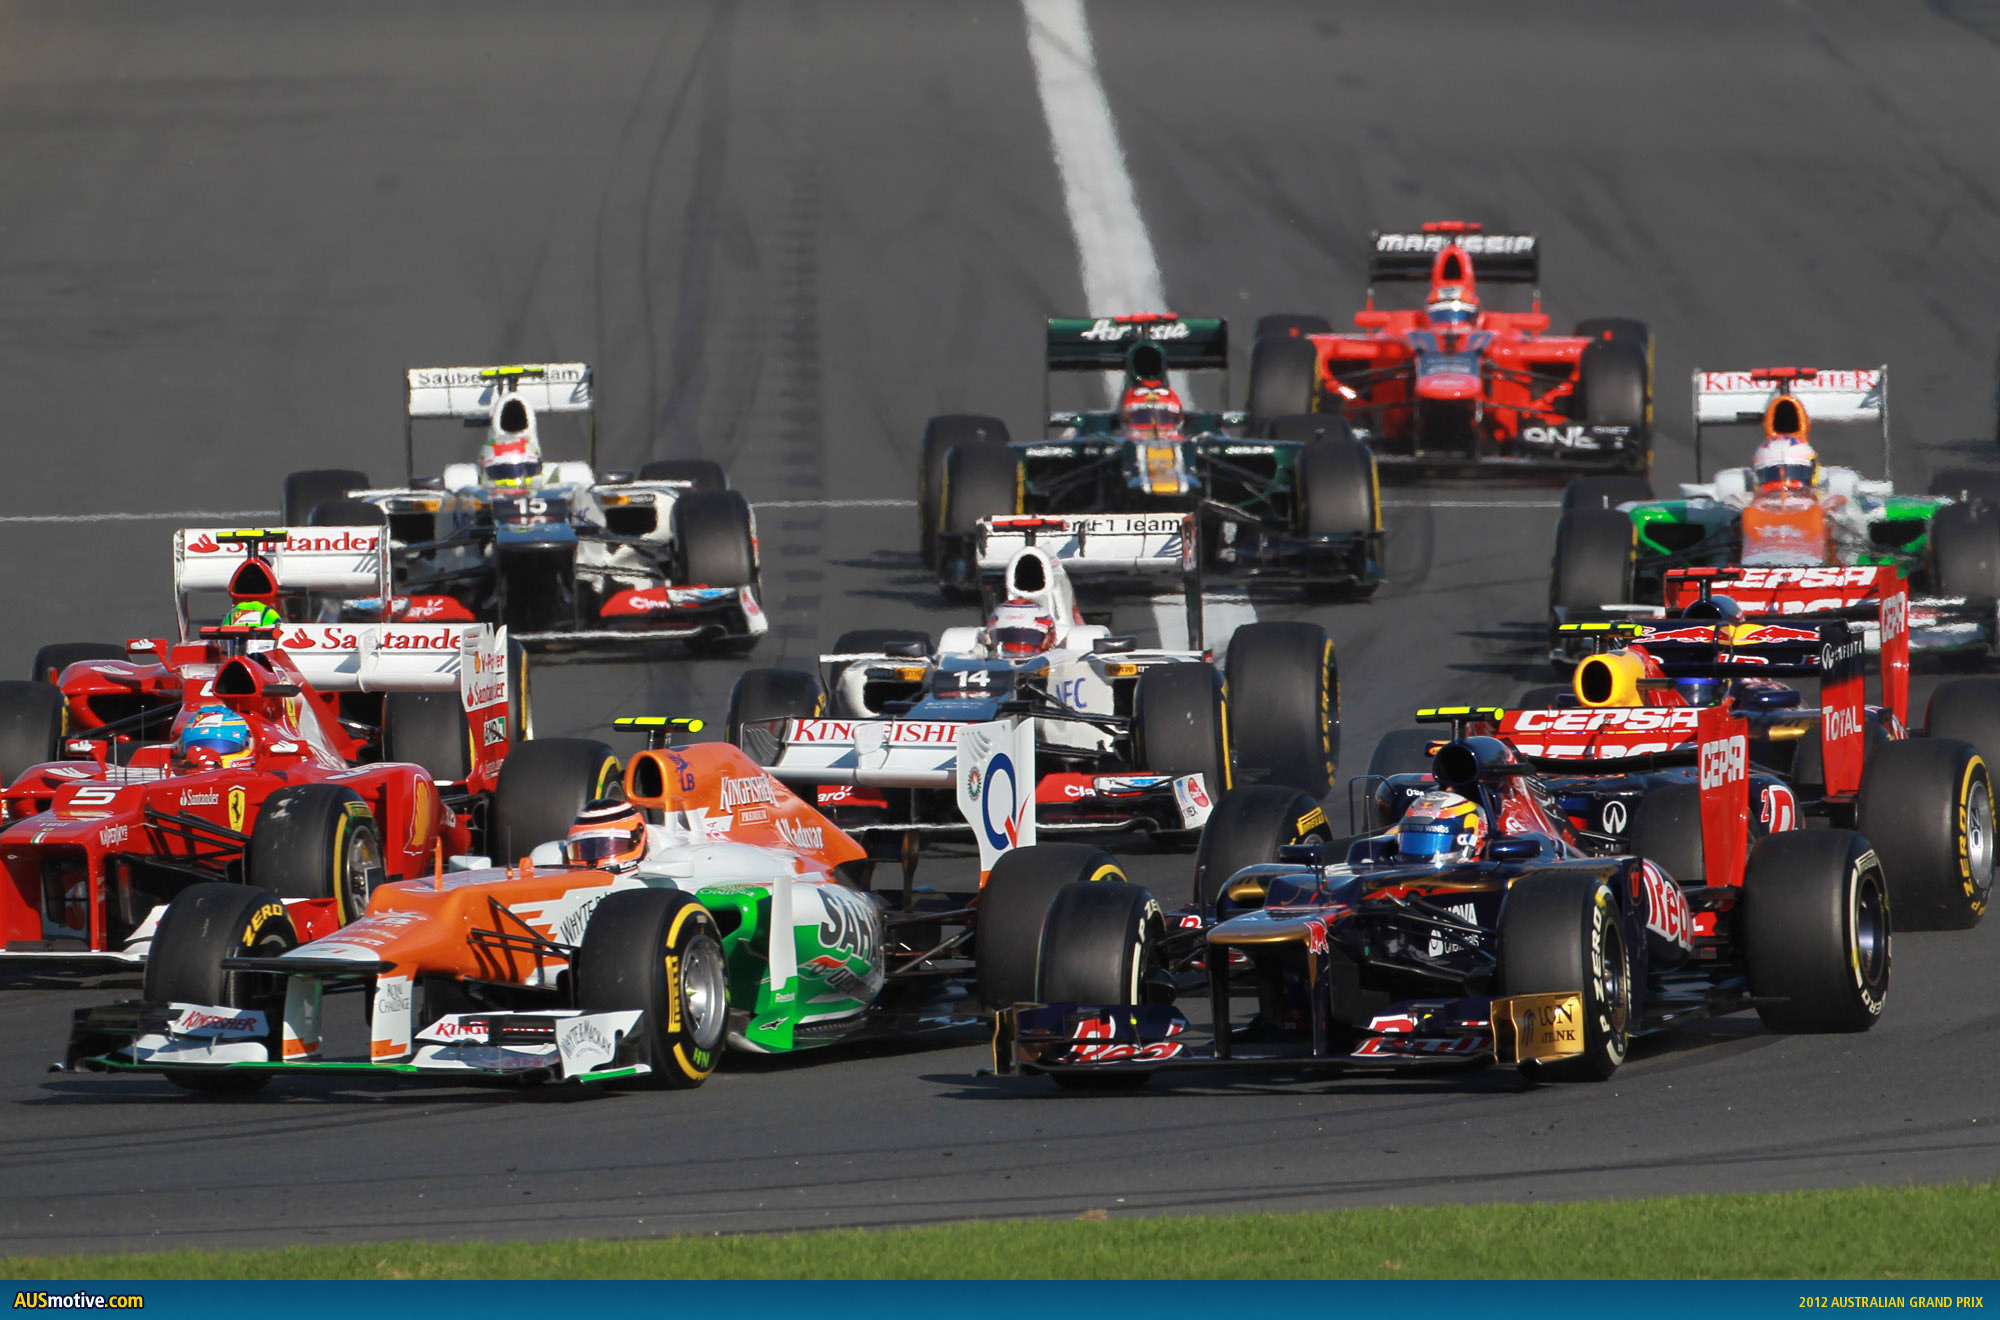 AUSmotive.com » 2012 Australian Grand Prix in pictures